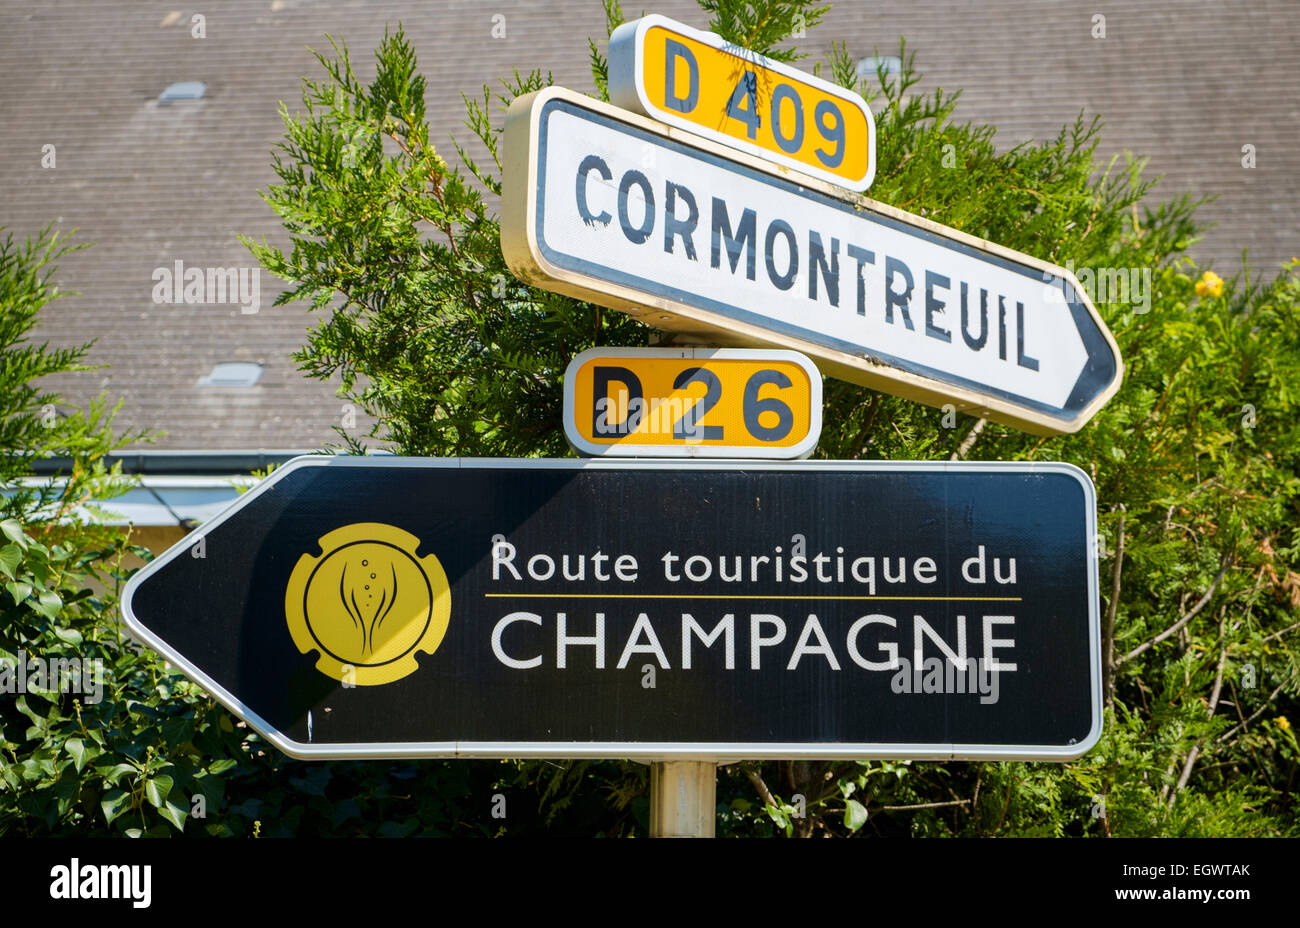 Champagne, France - vignobles piste touristique route road sign in Rilly-la-Montagne, Champagne, France, Europe Banque D'Images